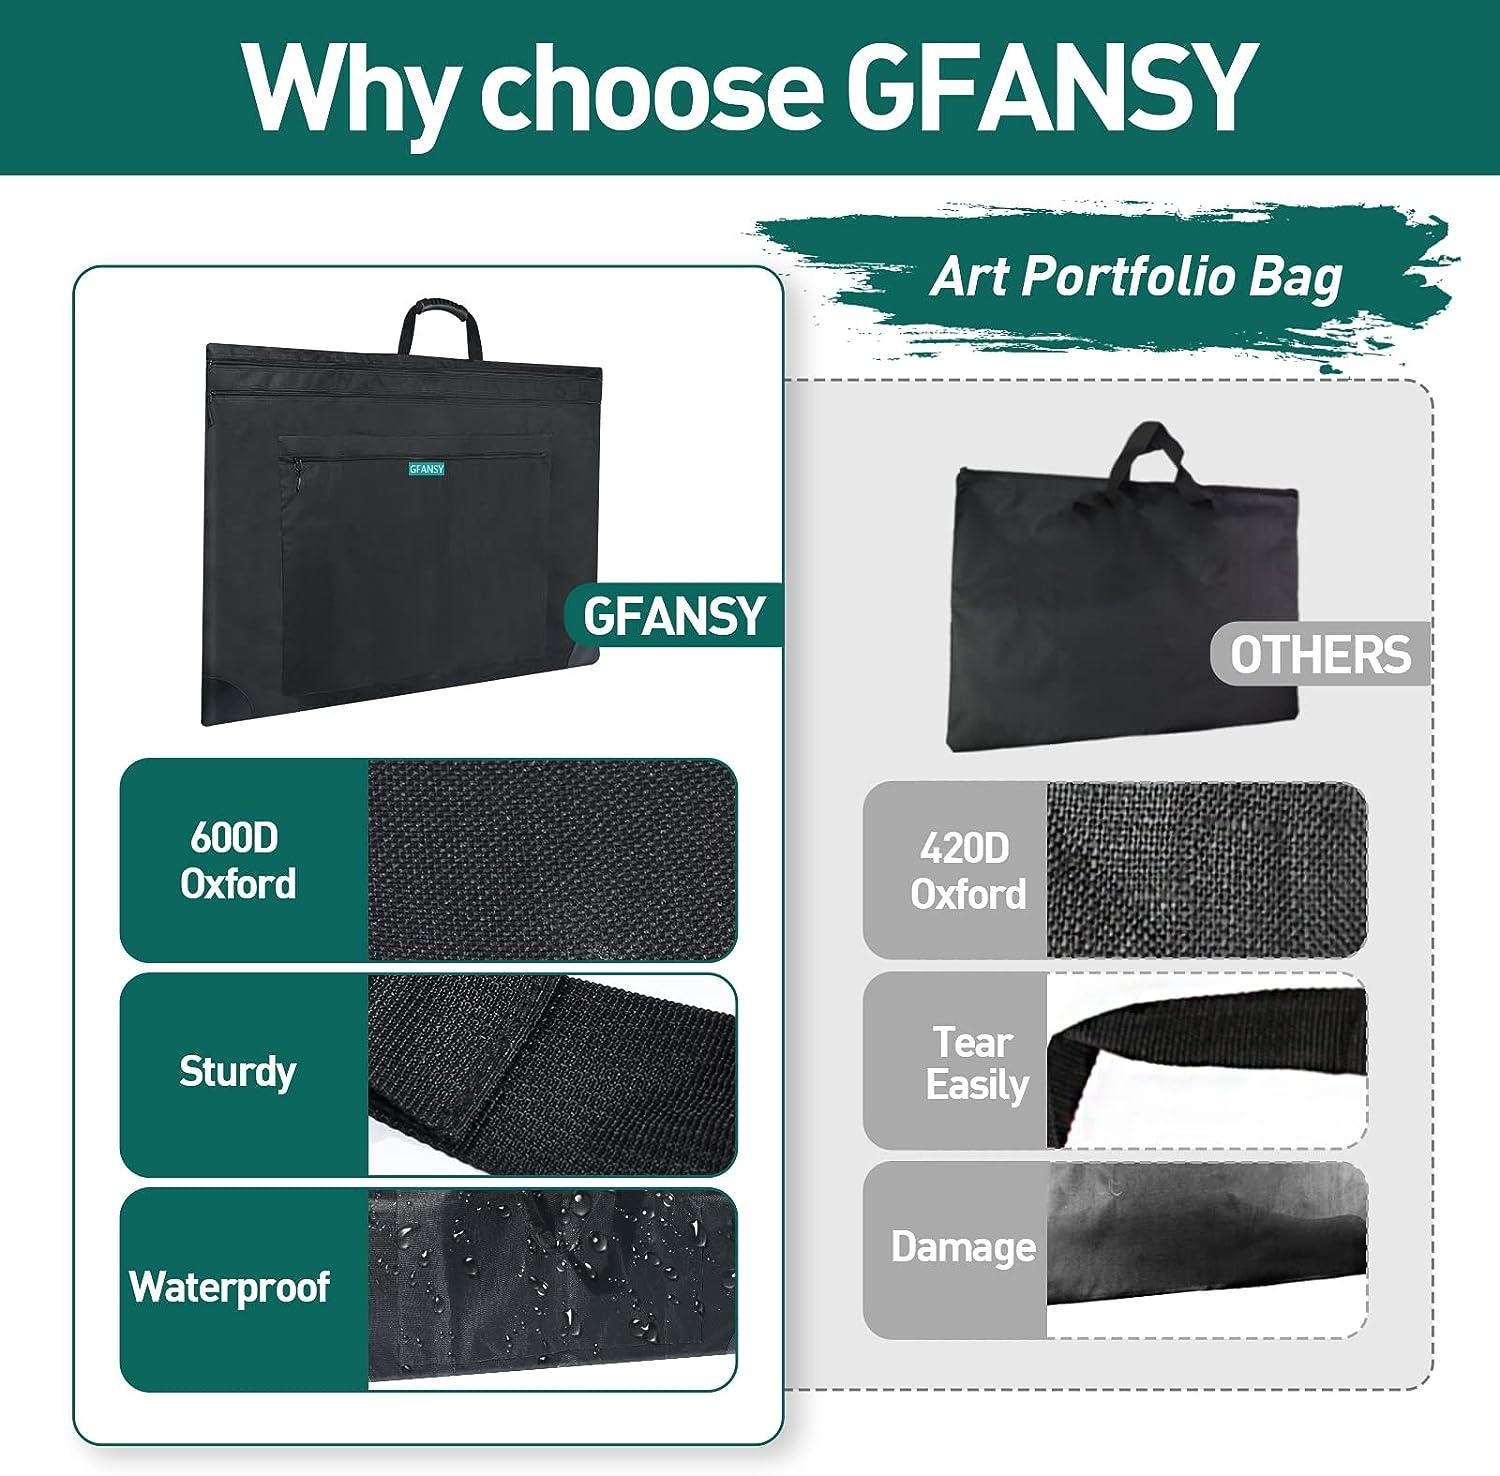  Professional Art Portfolio Bag with Detachable